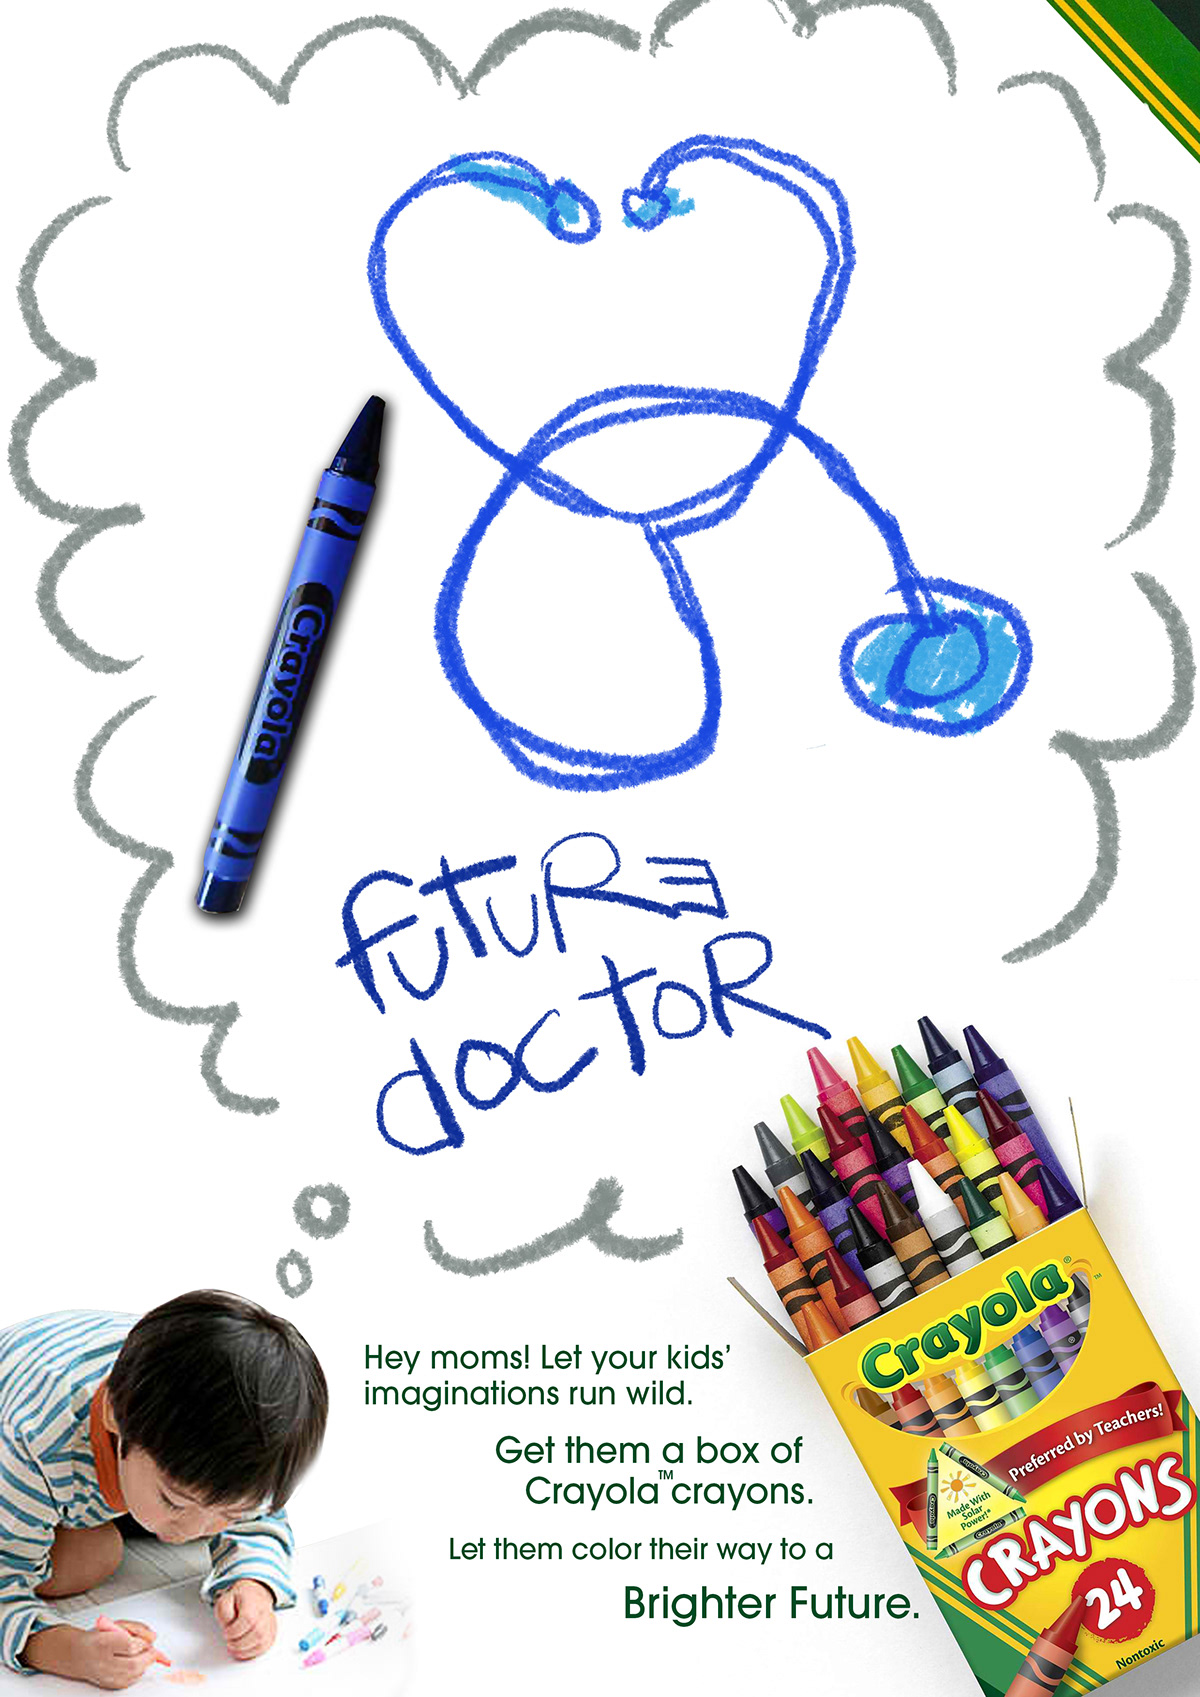 Crayola crayons ad campaign kids art drawings